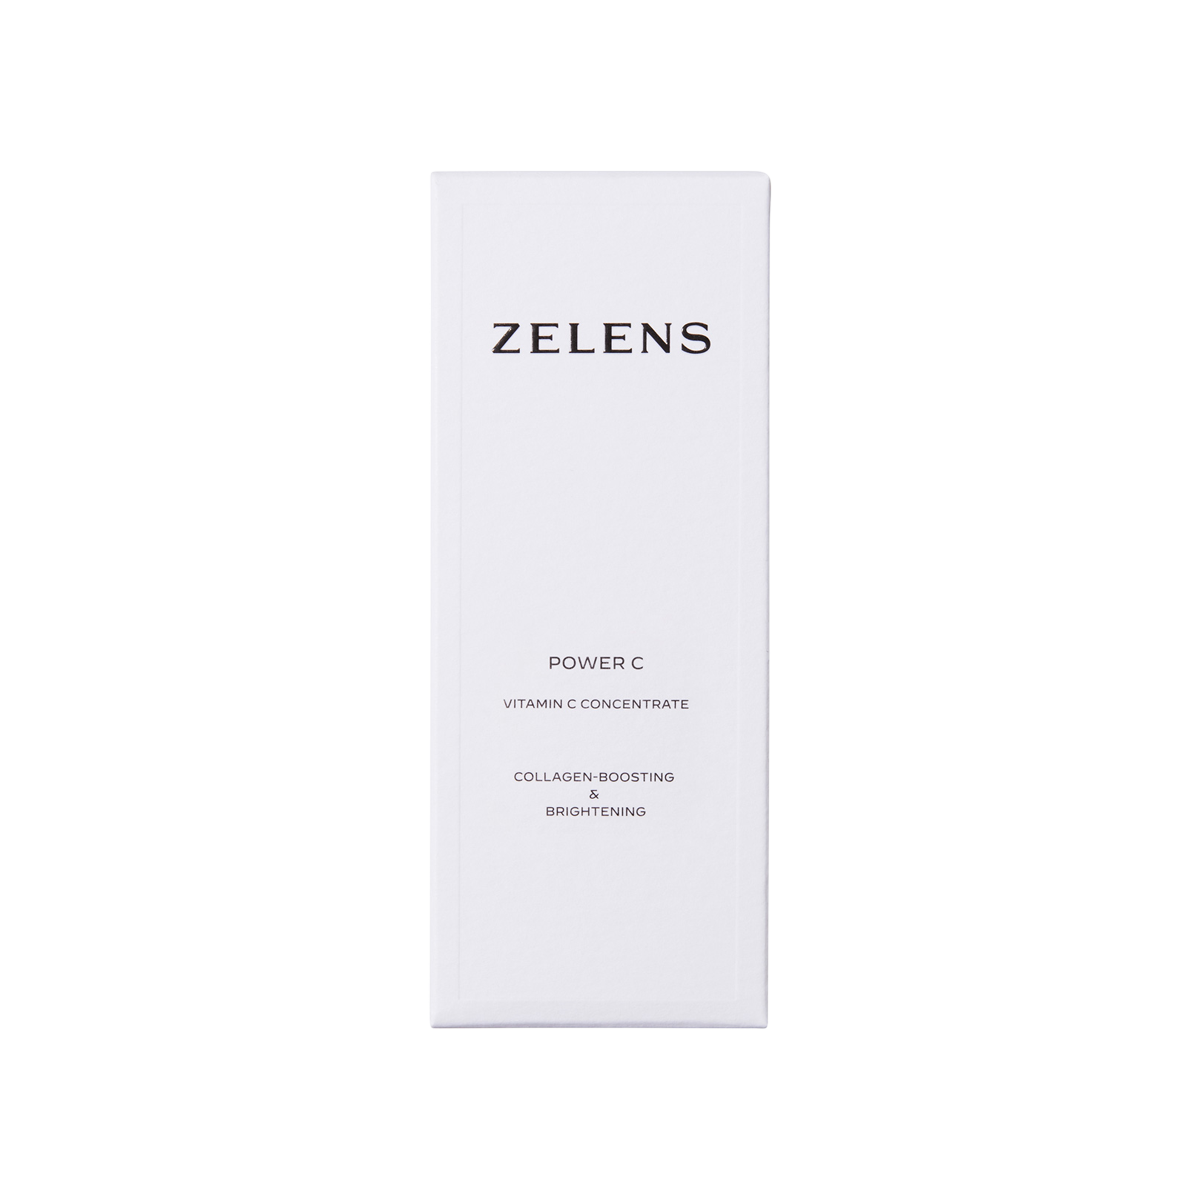 Zelens - Power C Collagen-boosting & Brightening